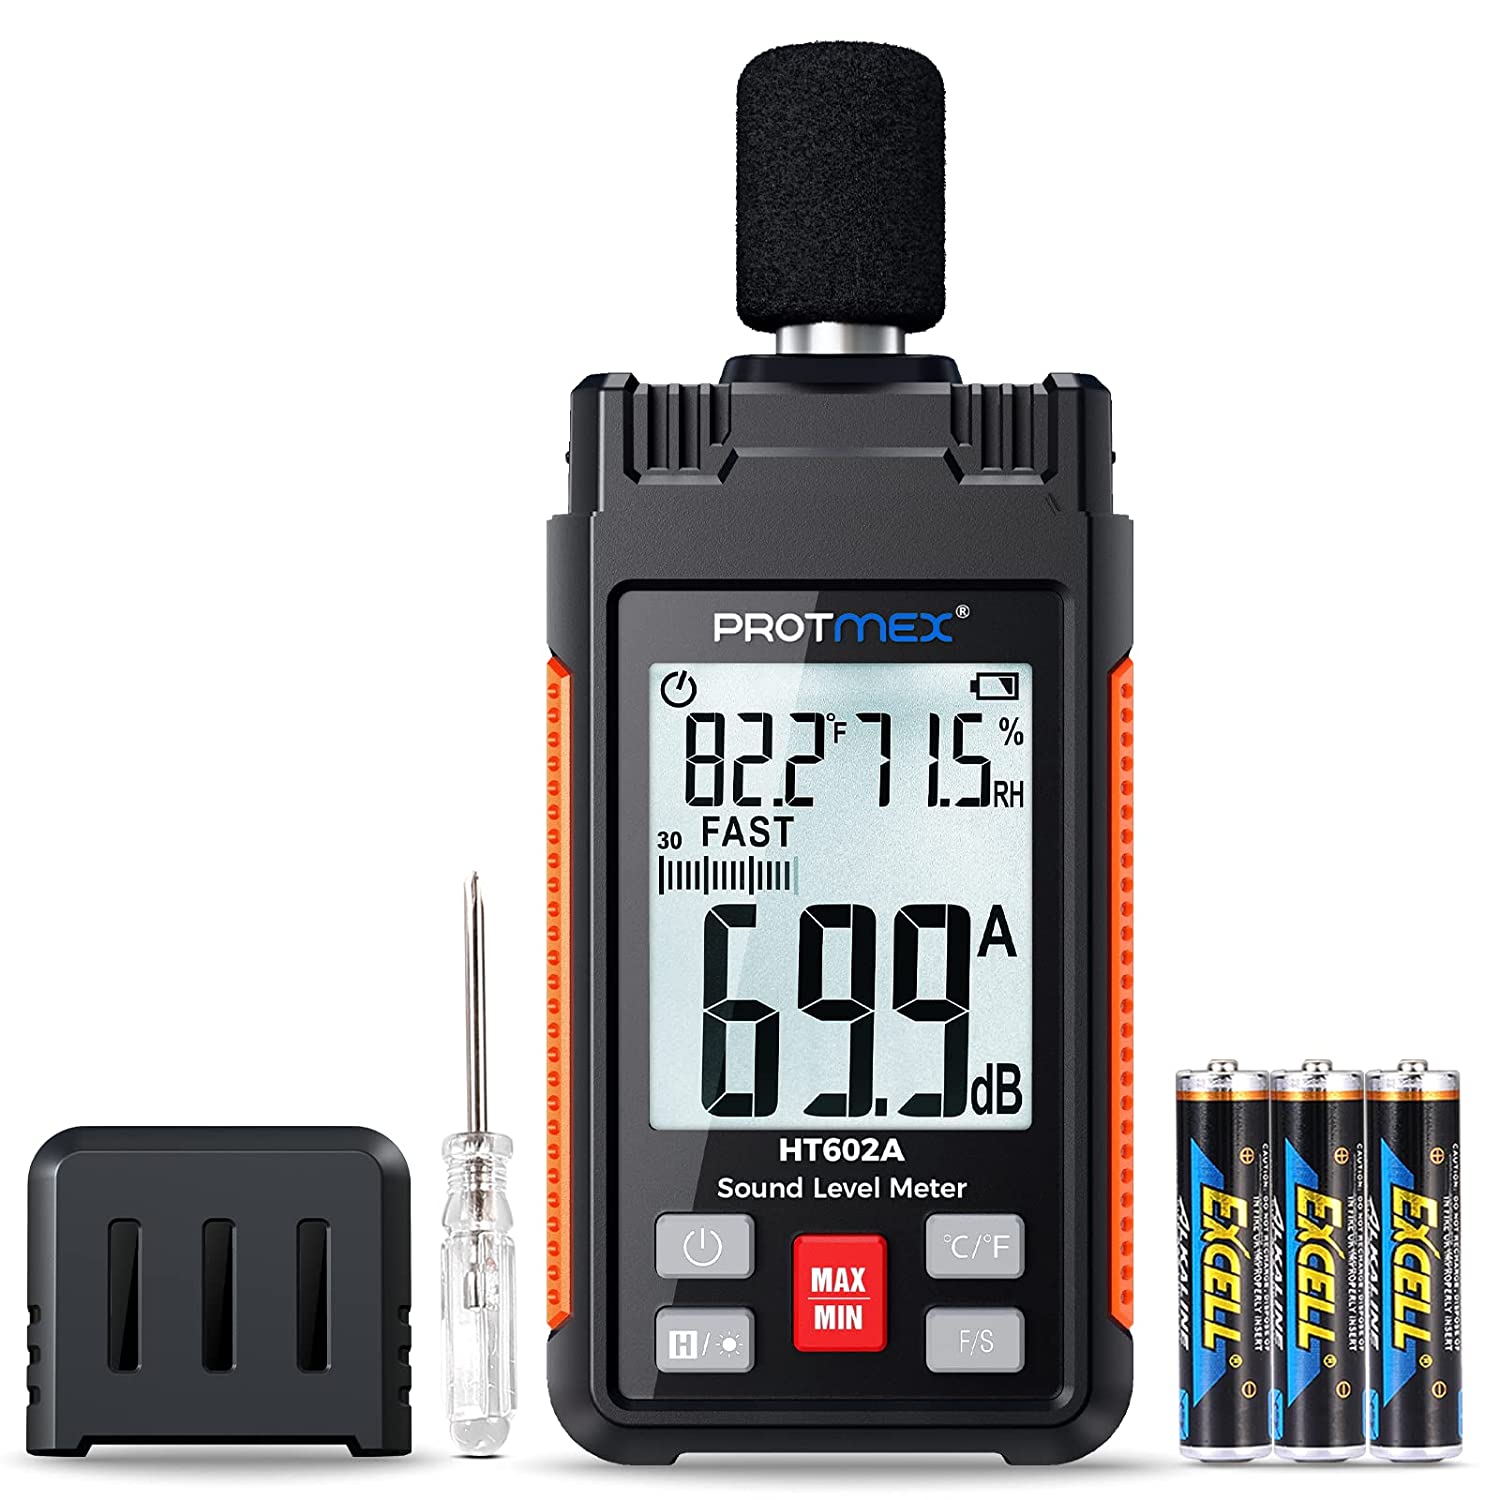 Protmex Decibel Meter,HT602A Sound Level Meter with [...]